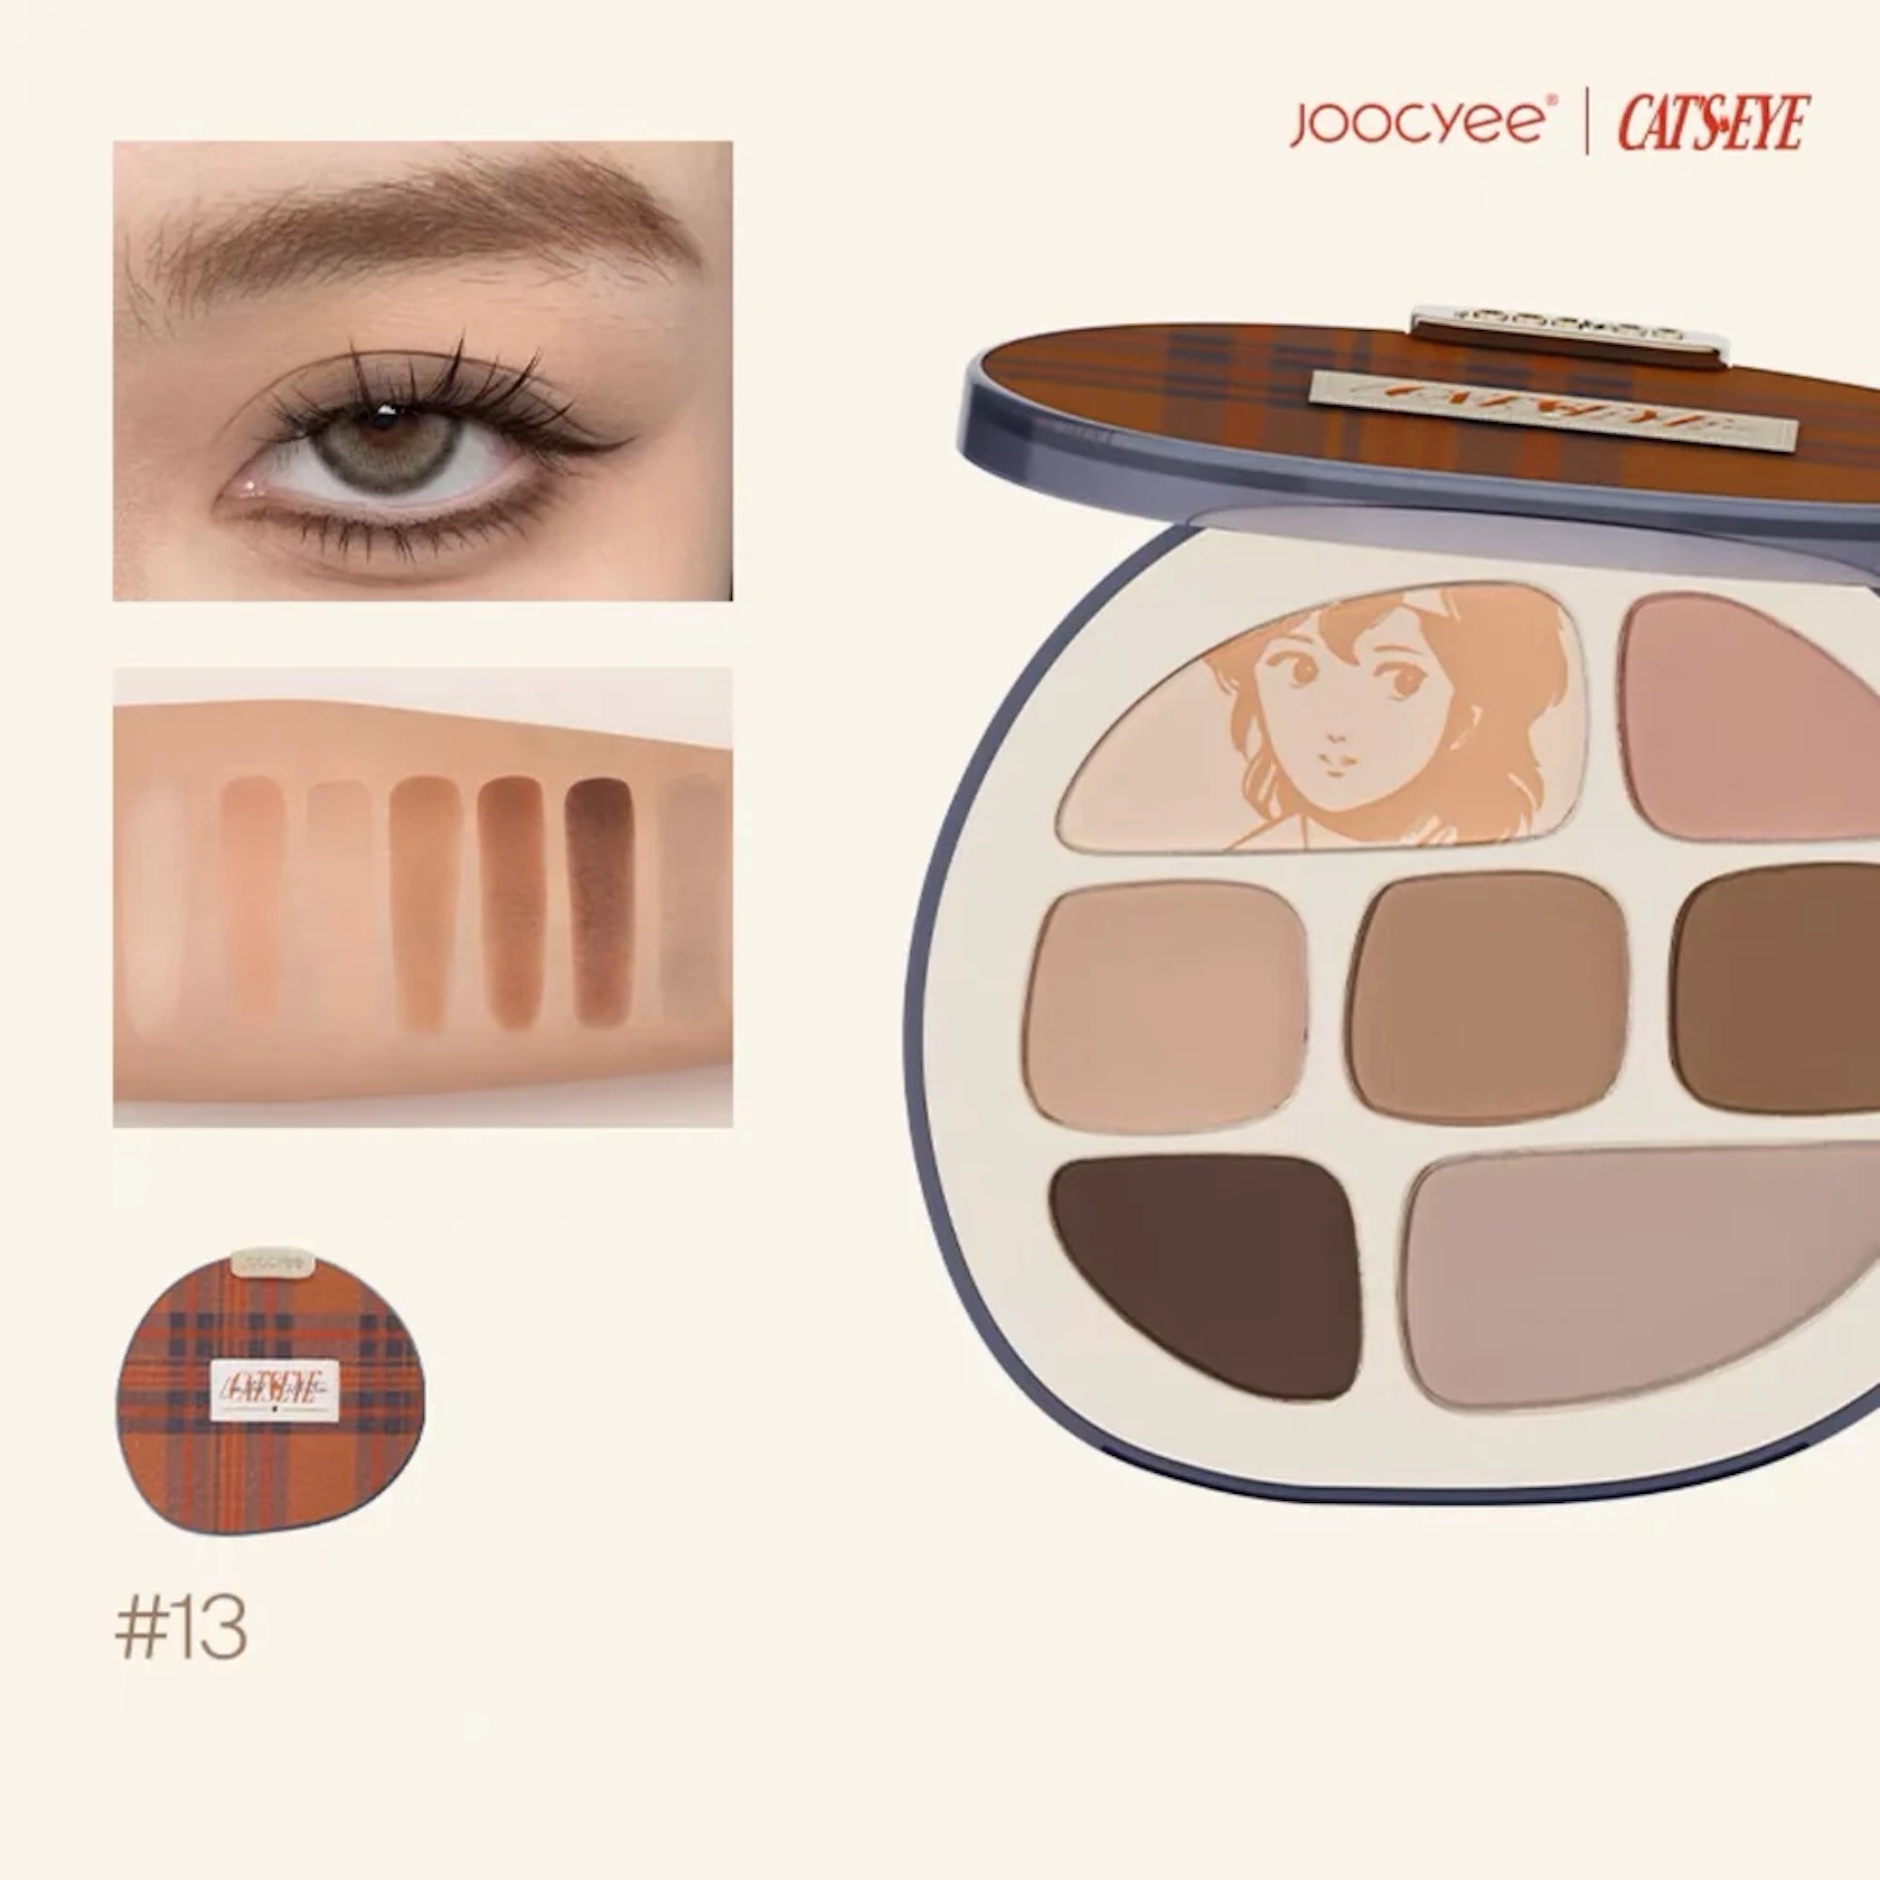 Joocyee-Multi-Color Makeup Palette